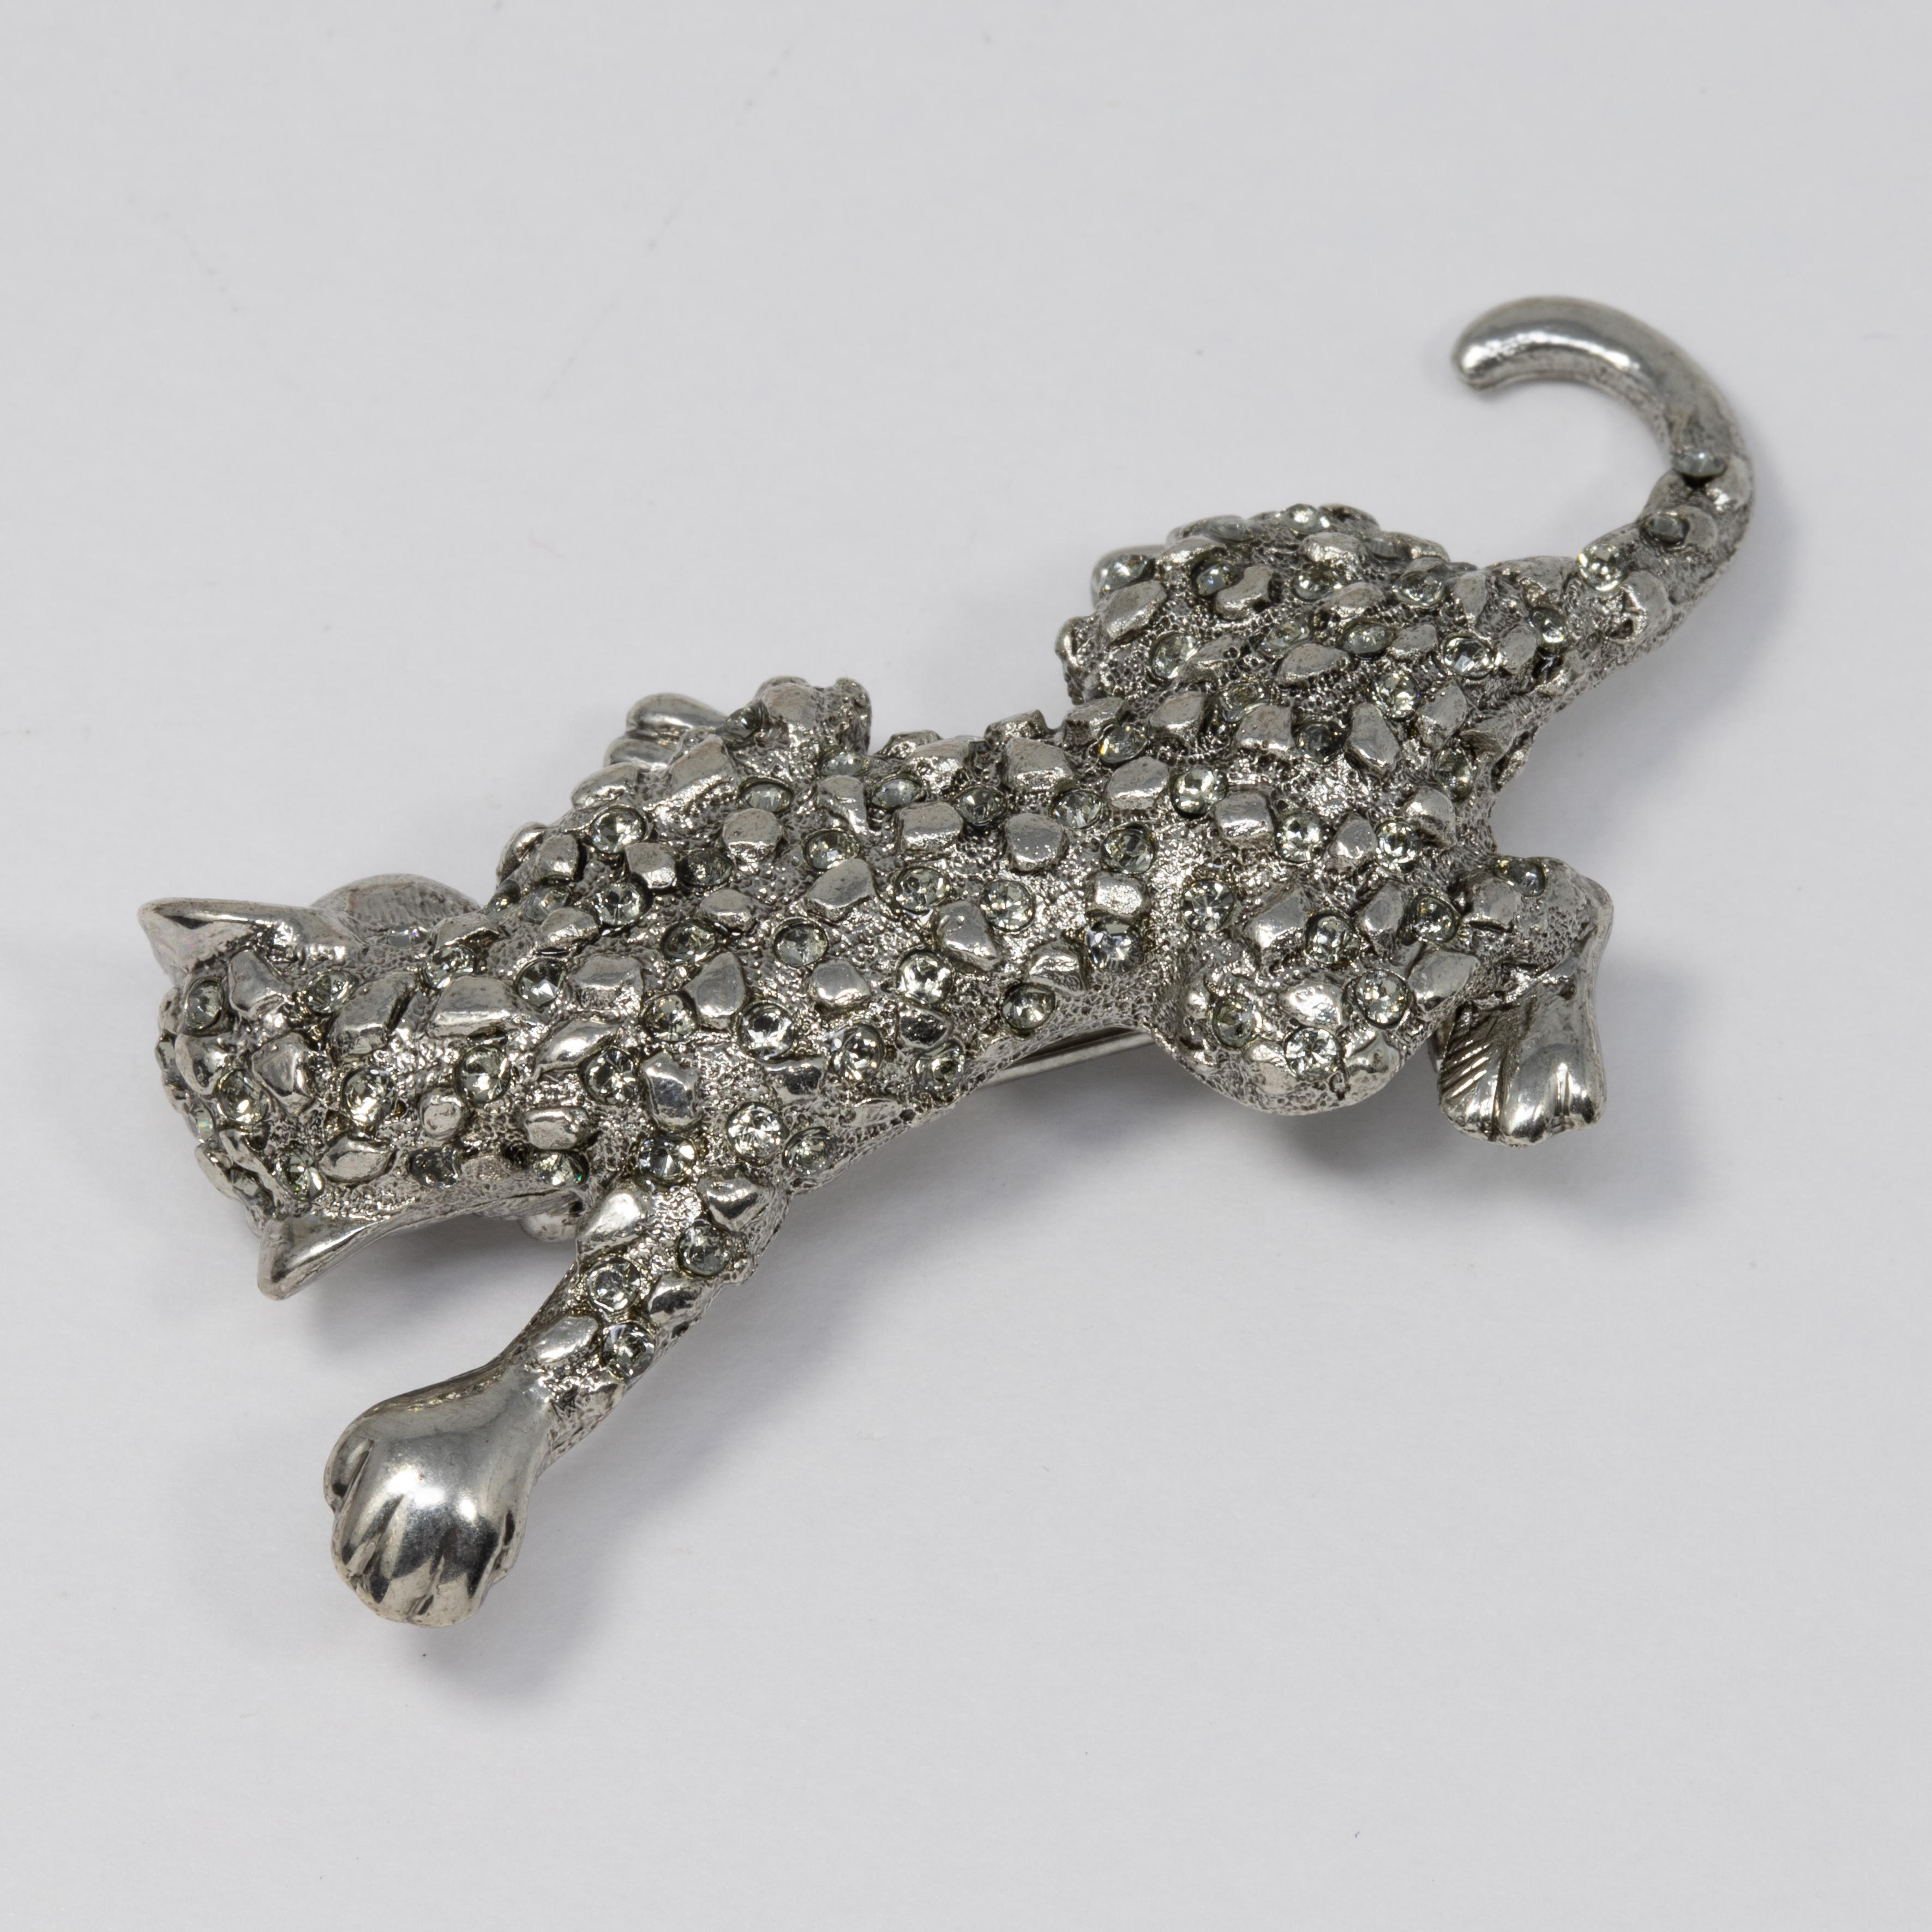 An embellished leopard pin brooch by Oscar de la Renta. This silvertone wildcat is decorated with black diamond Swarovski crystals.

Hallmarks: Oscar de la Renta, Made in USA